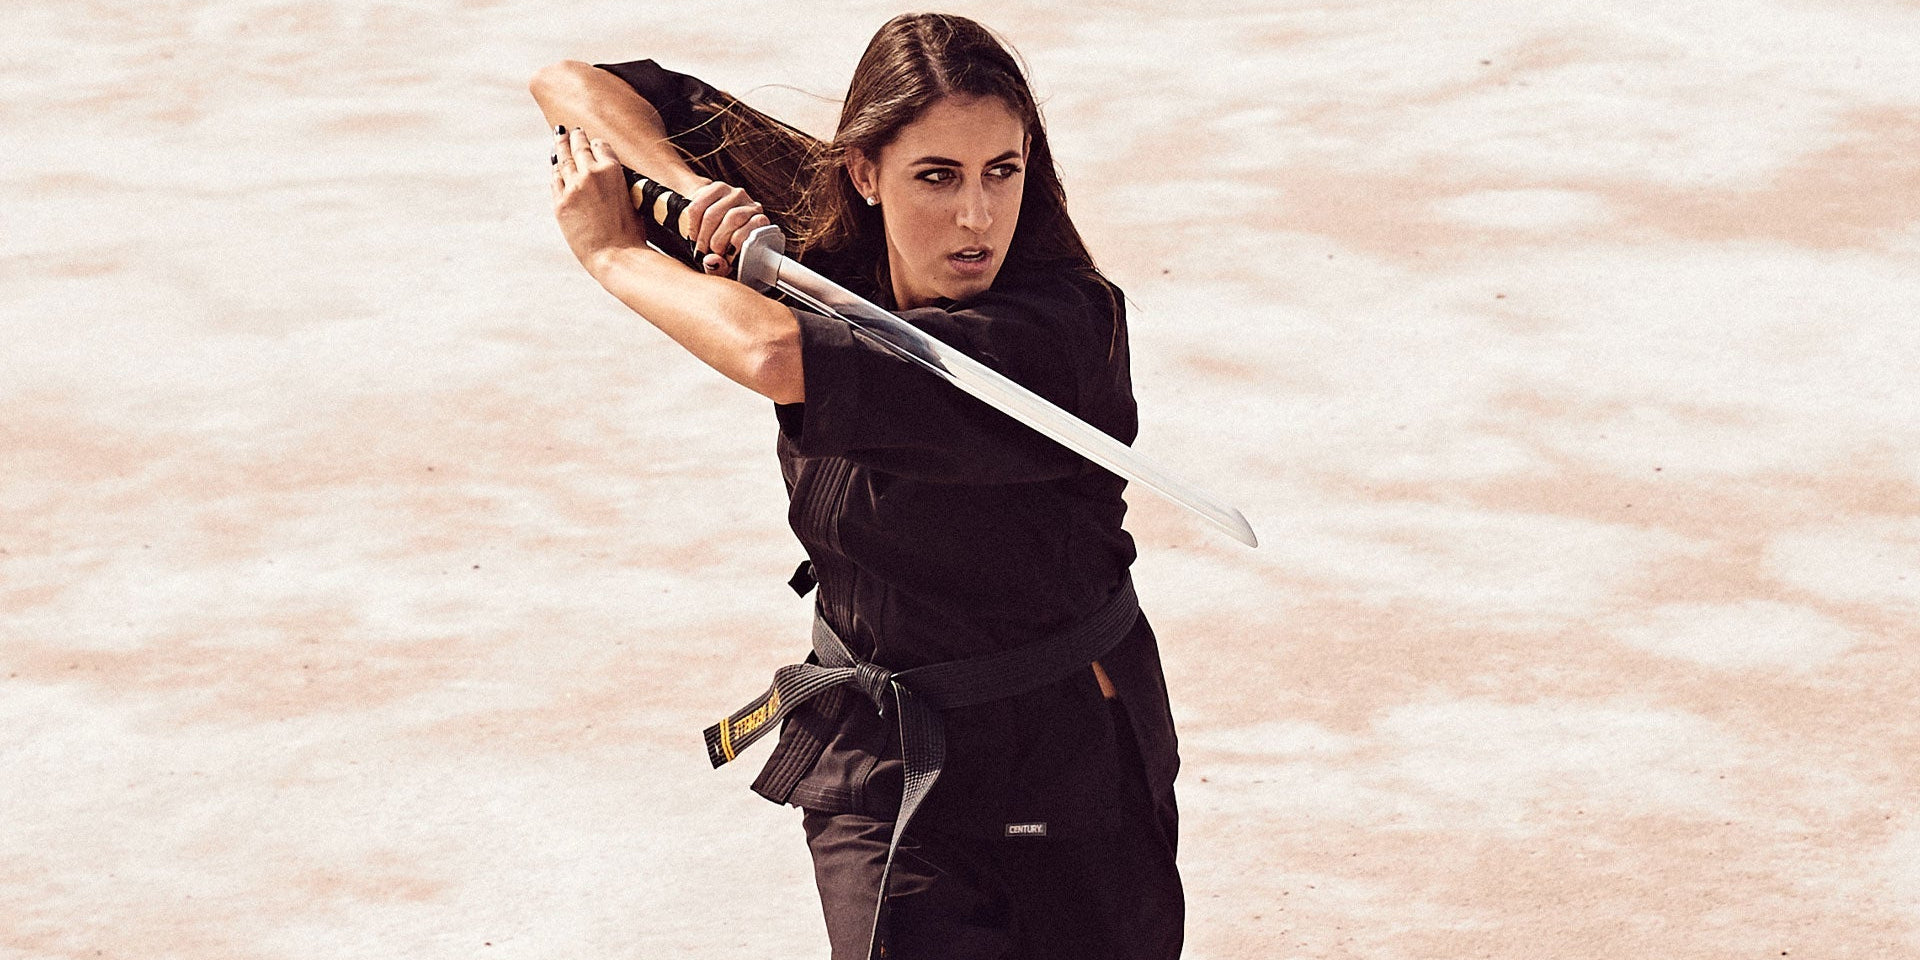 woman training in martial arts on salt plains